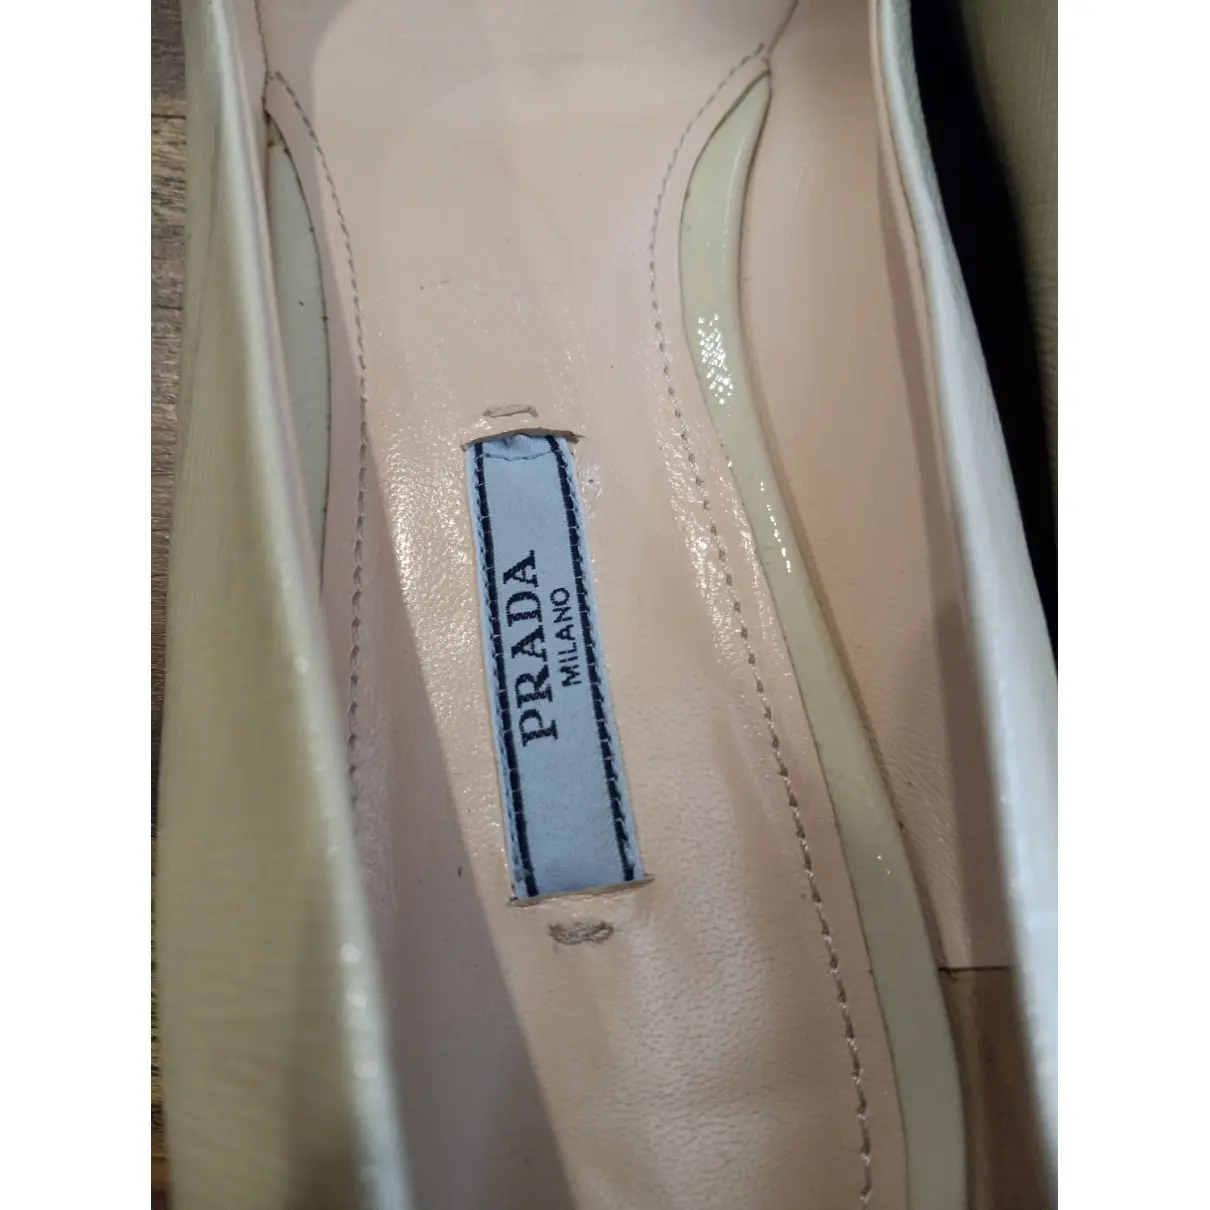 Patent leather ballet flats Prada